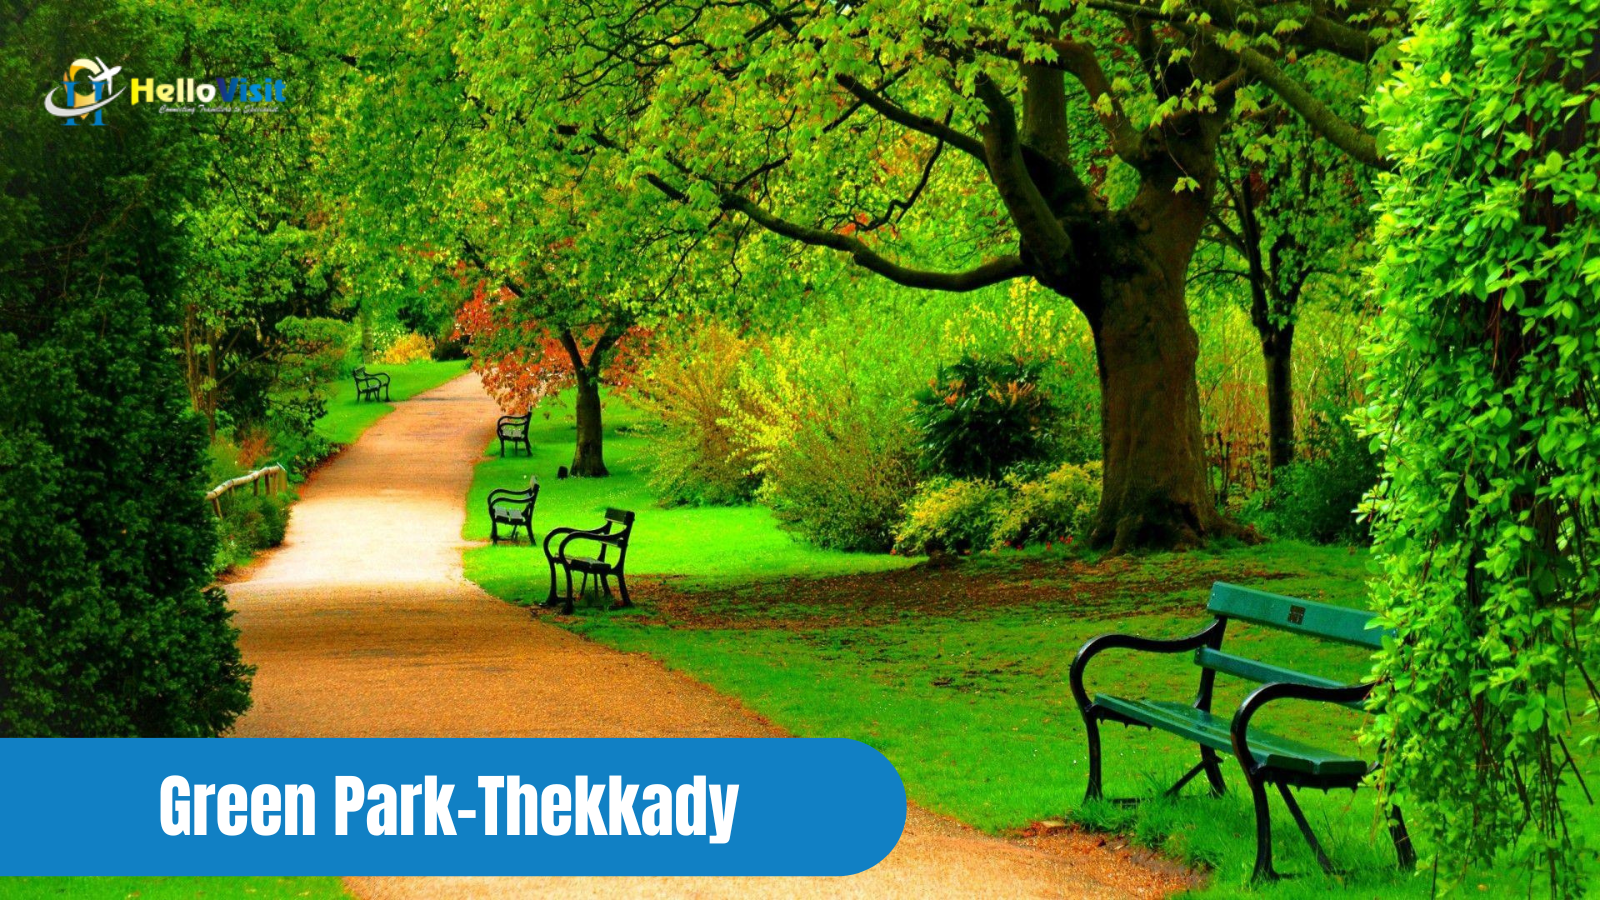 Green Park-Thekkady